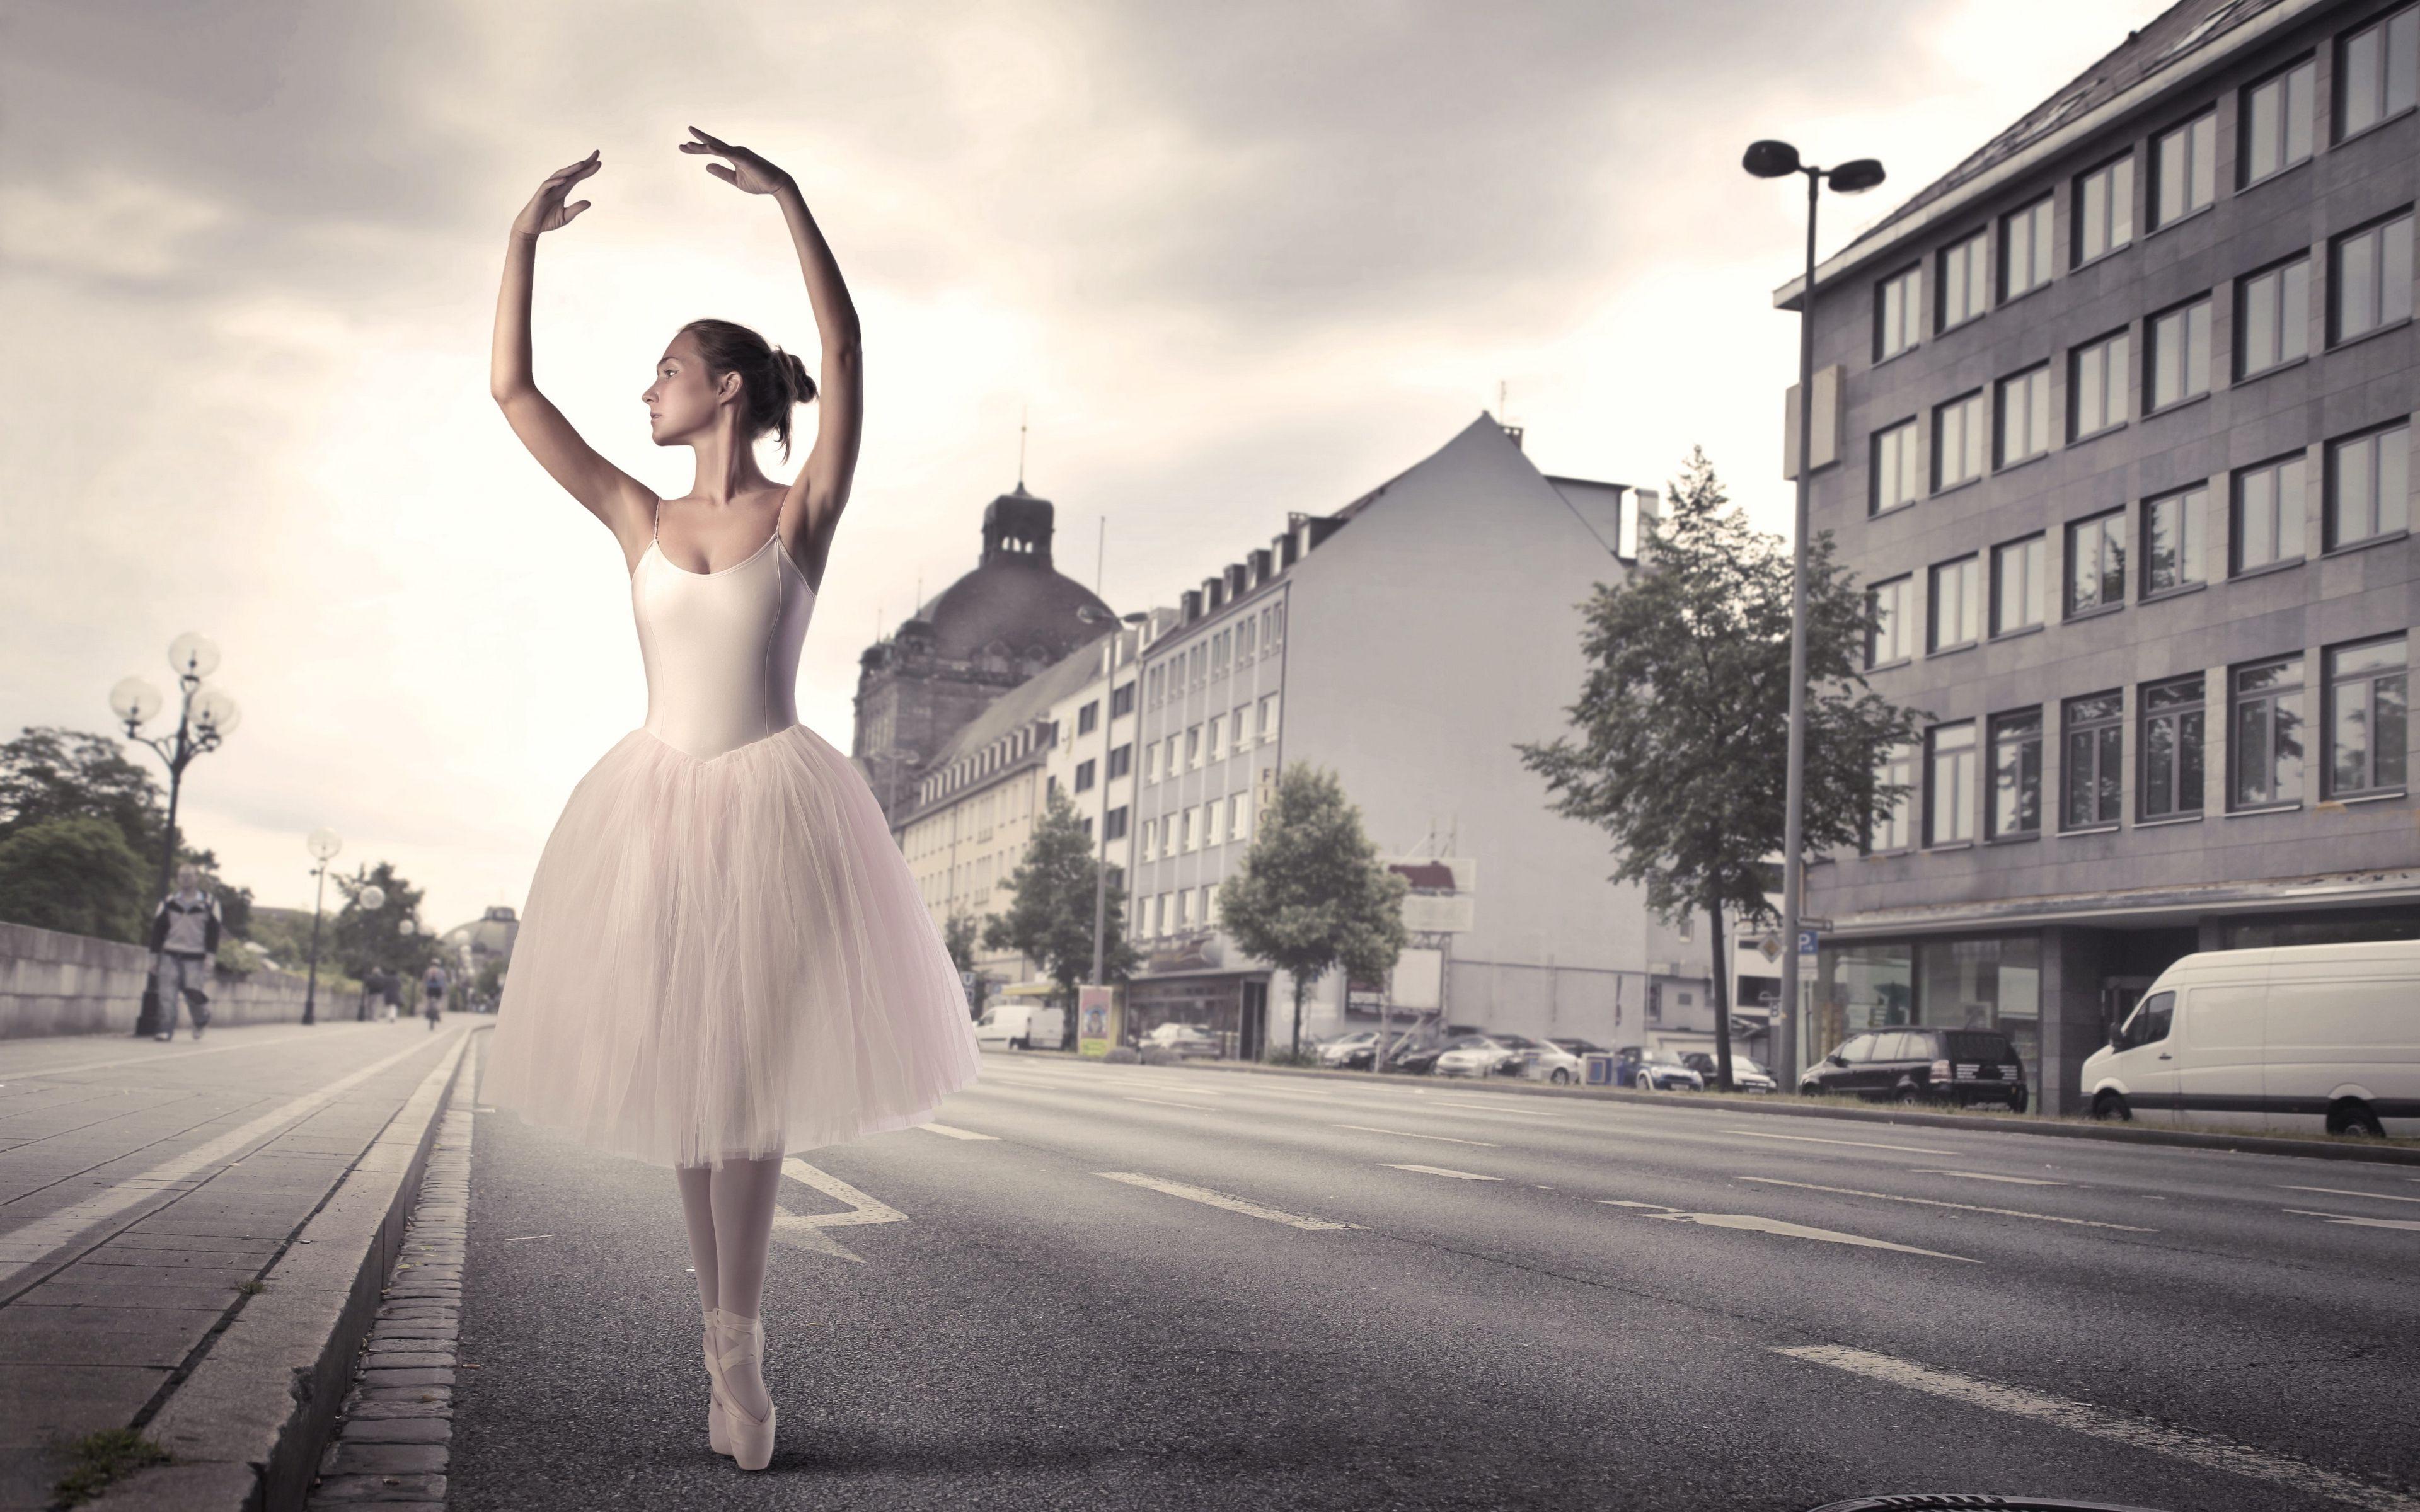 Download wallpaper 3840x2400 ballerina, road, city, dance 4k ultra